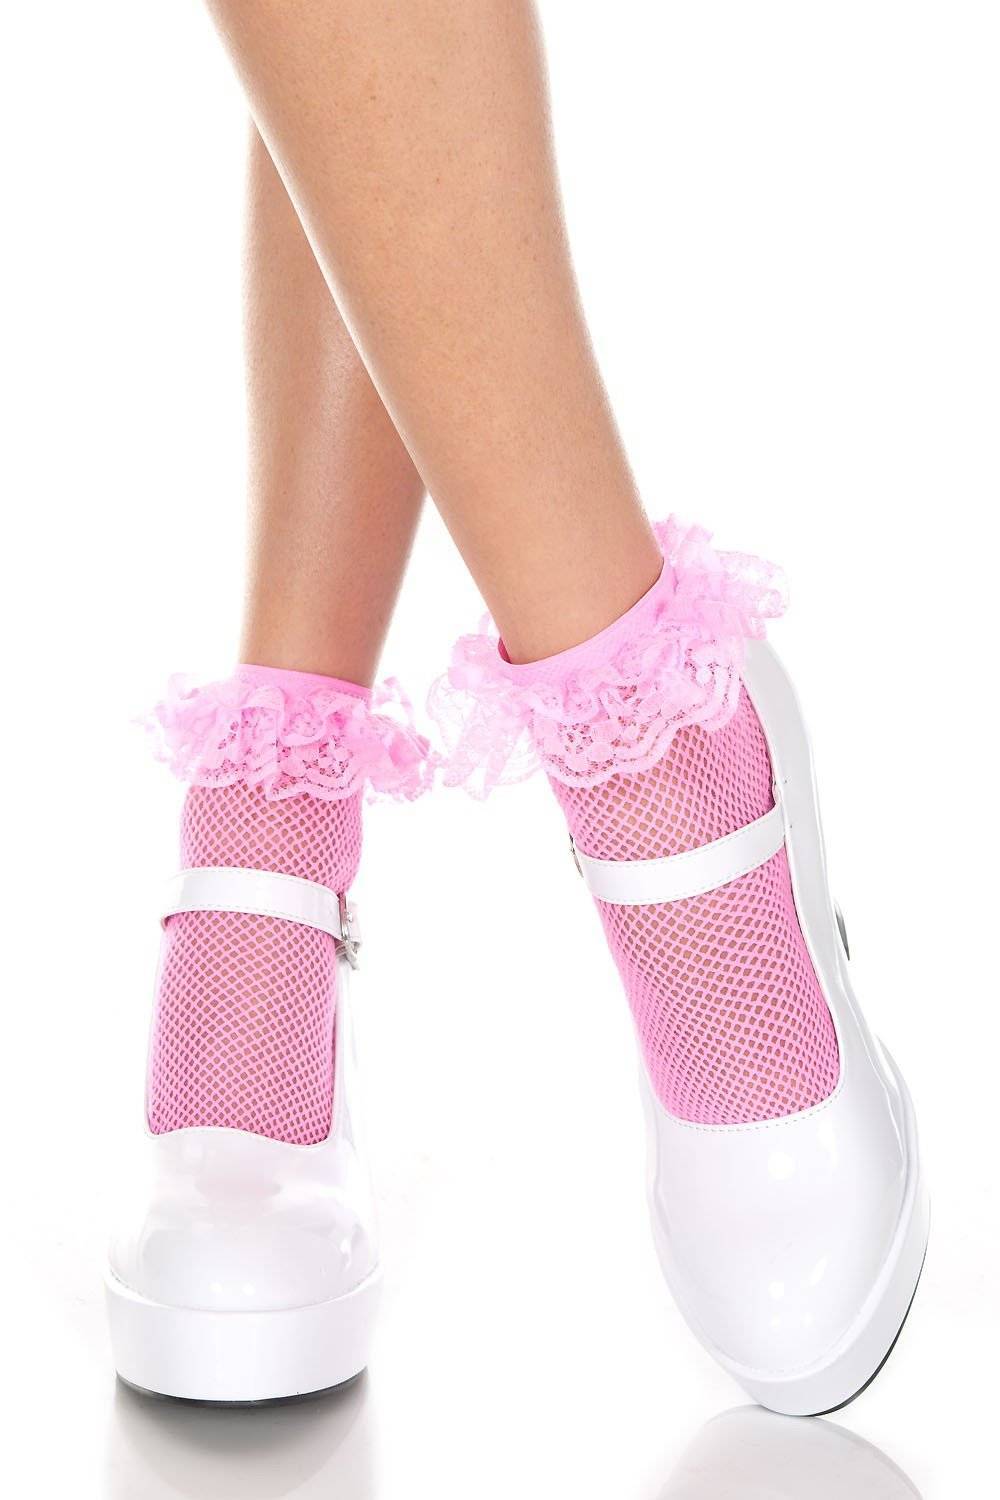 Black White Pink Fishnet Ankle Socks + Lace Ruffle Trim